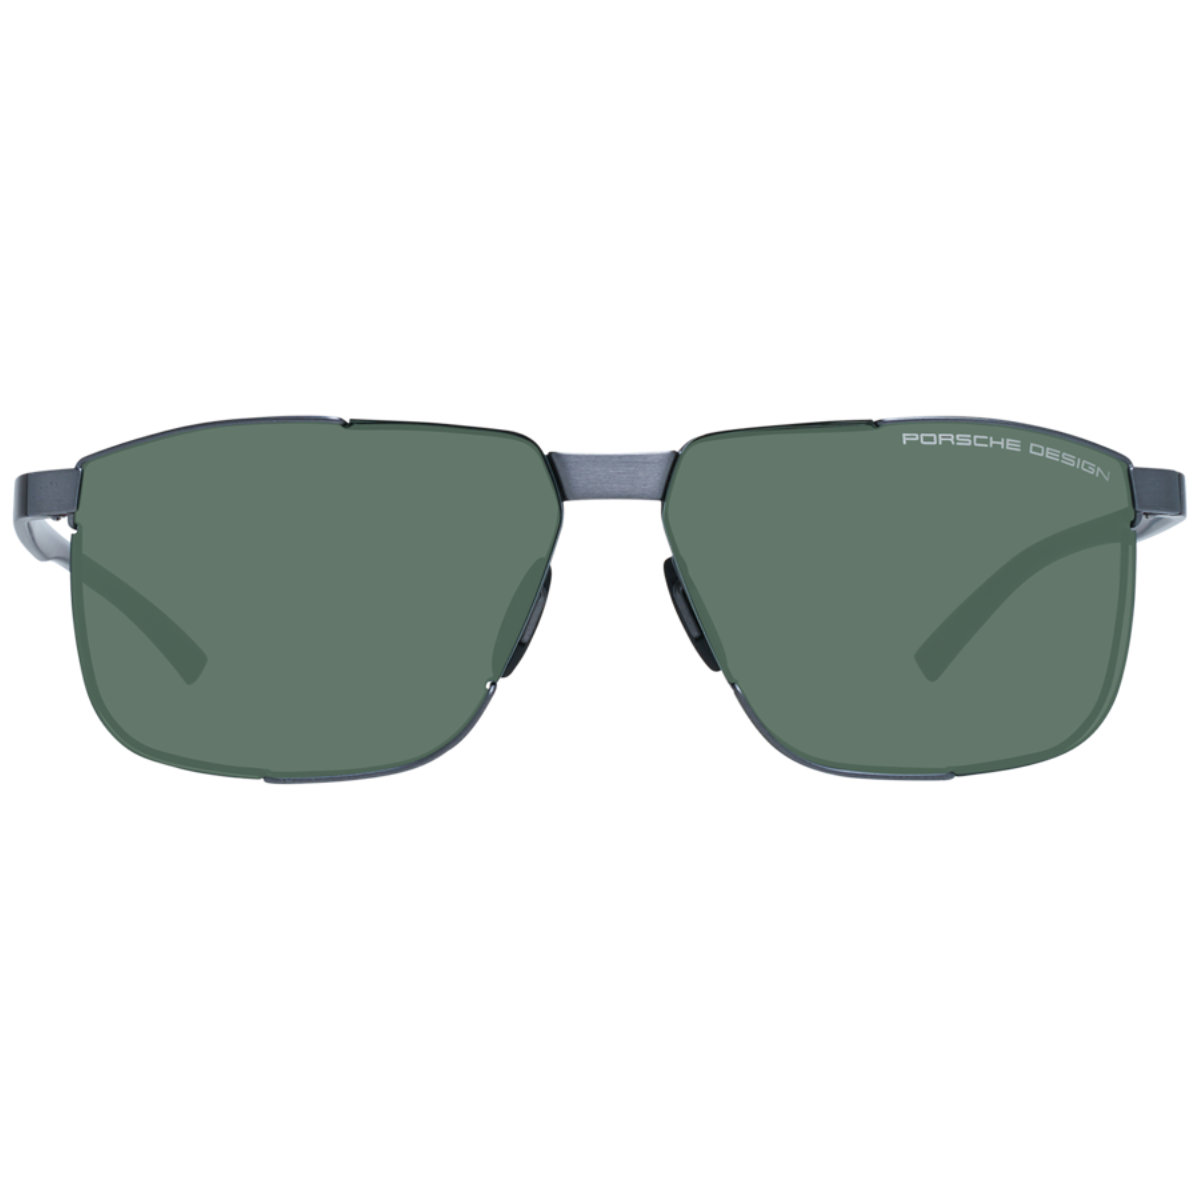 "Sleek Porsche Design P8680 Sunglasses at Optorium: Rectangular frame, mirror grey lenses, trendy and polarized for a bold look. optorium"